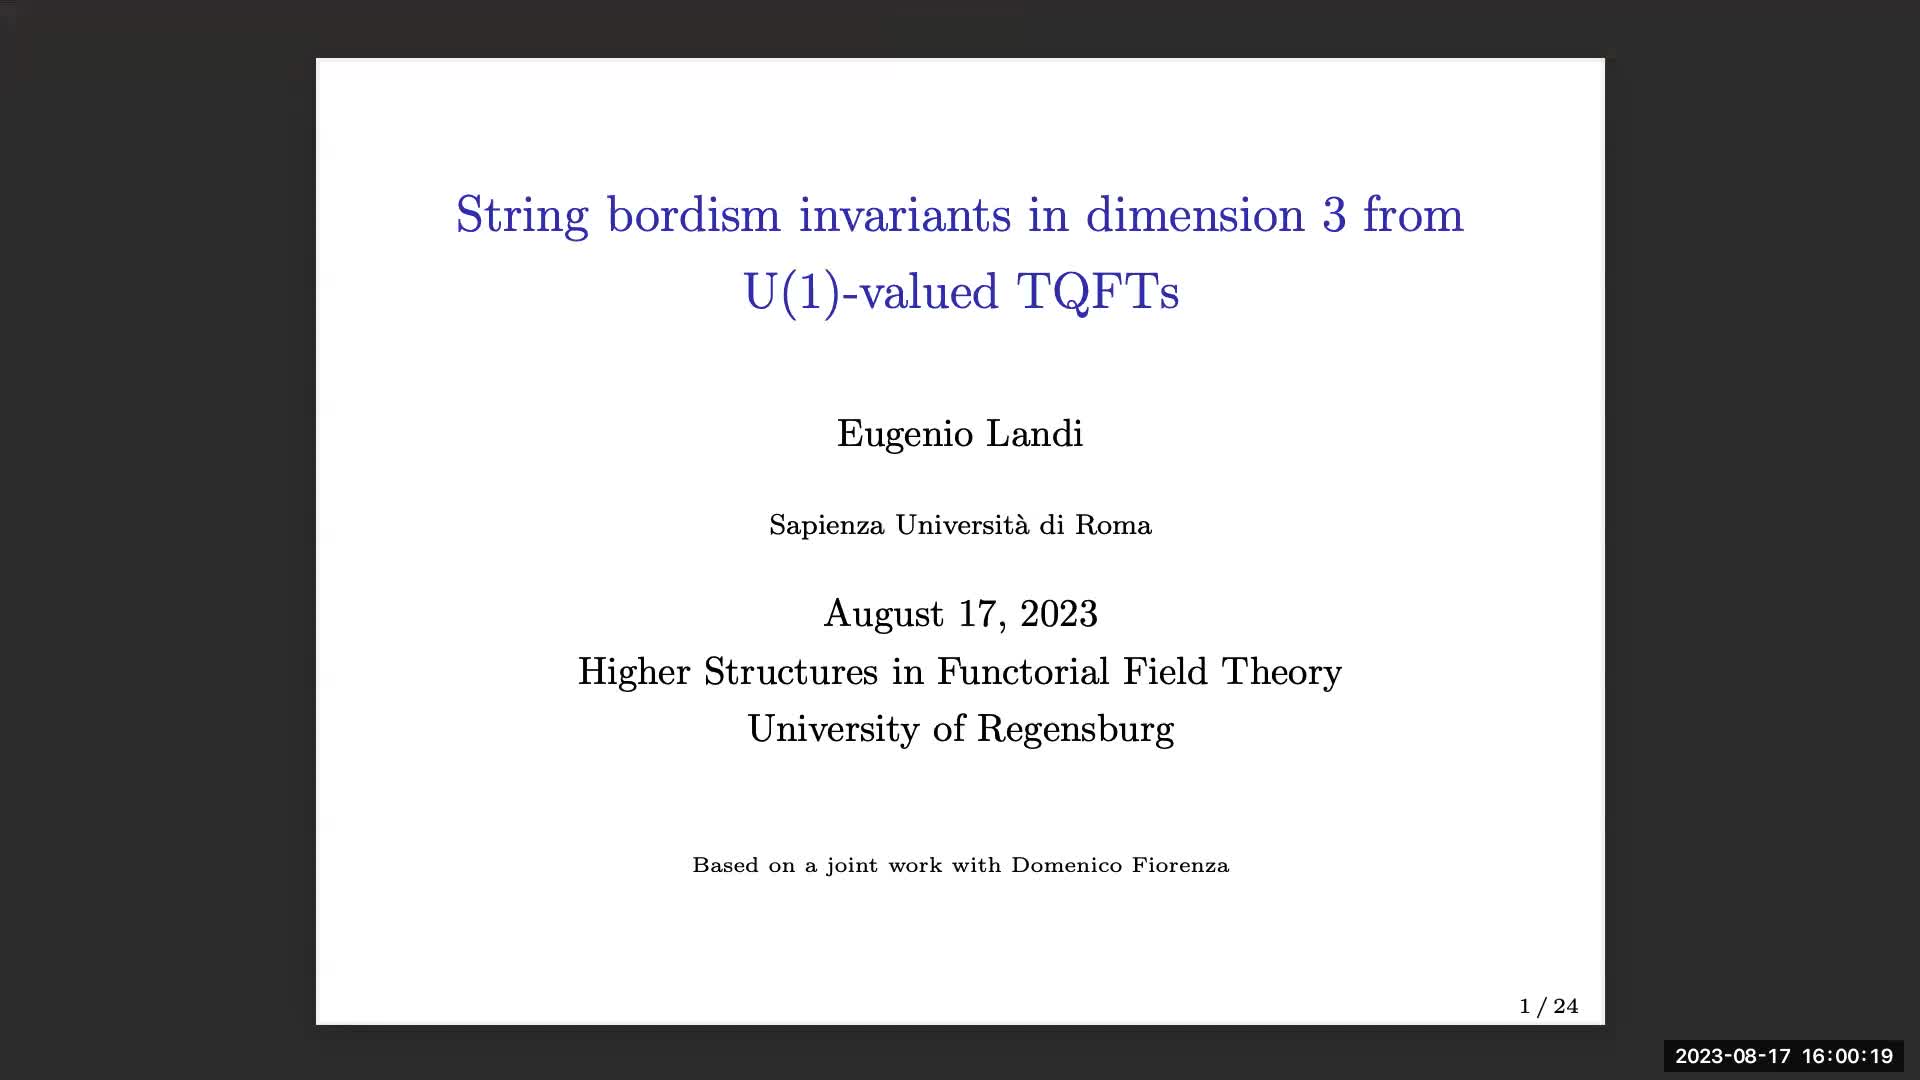 Eugenio Landi: String bordism invariants in dimension 3 from U(1)-valued TQFTs